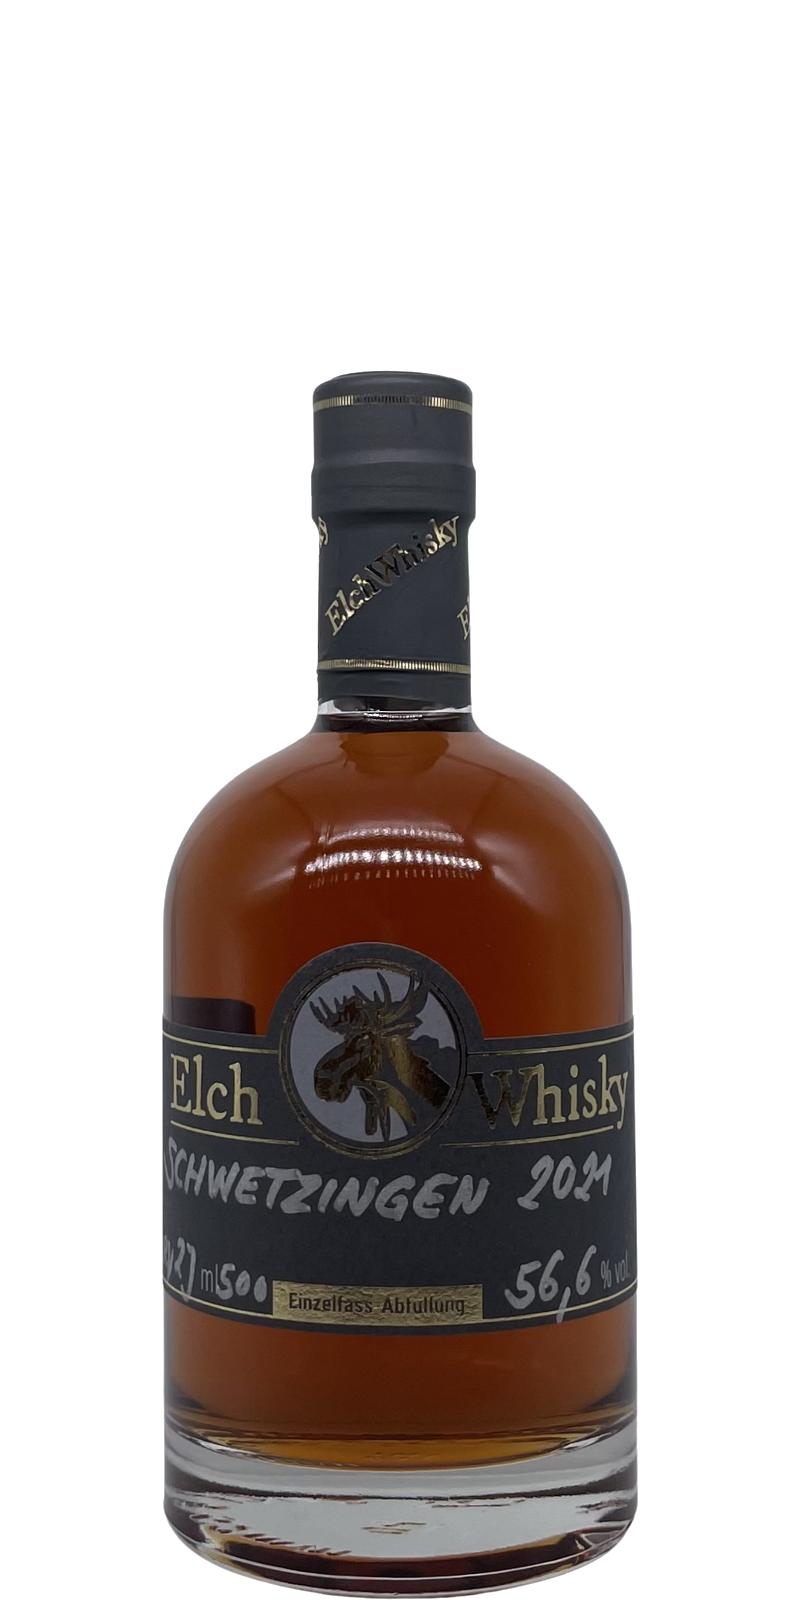 Elch Whisky Schwetzingen 2021 5yo Bourbon 2yo Sherry Los 21/15 56.6% 500ml